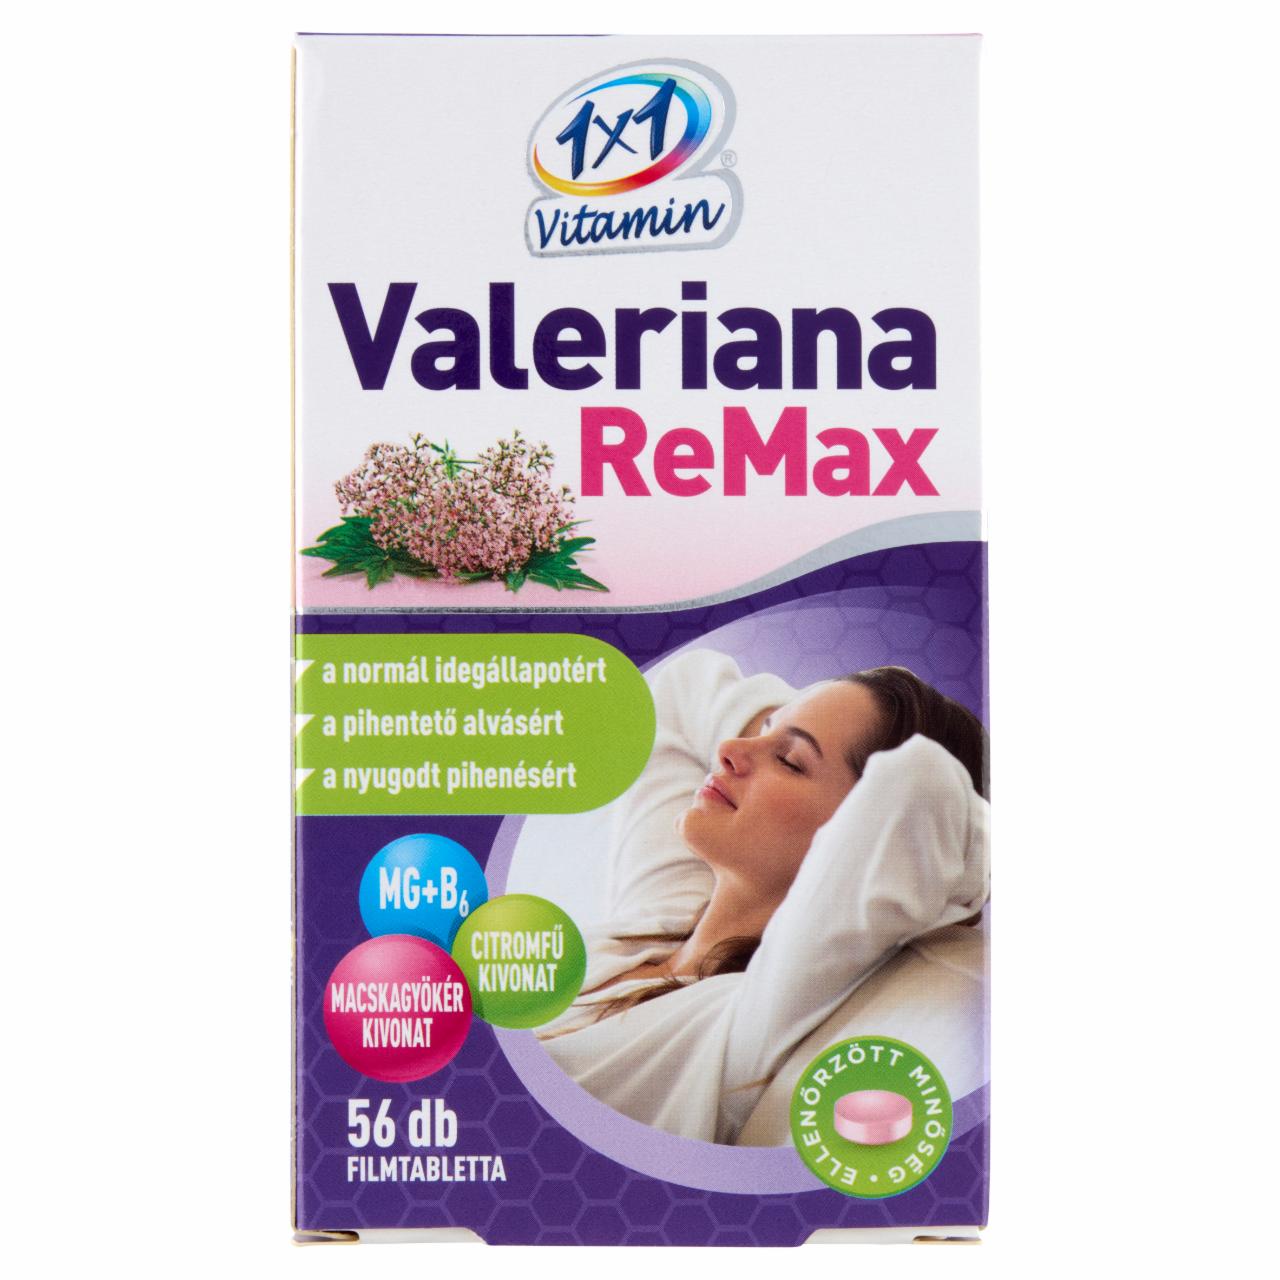 Képek - 1x1 Vitamin Valeriana ReMax étrend-kiegészítő filmtabletta 56 x 500 mg (28 g)